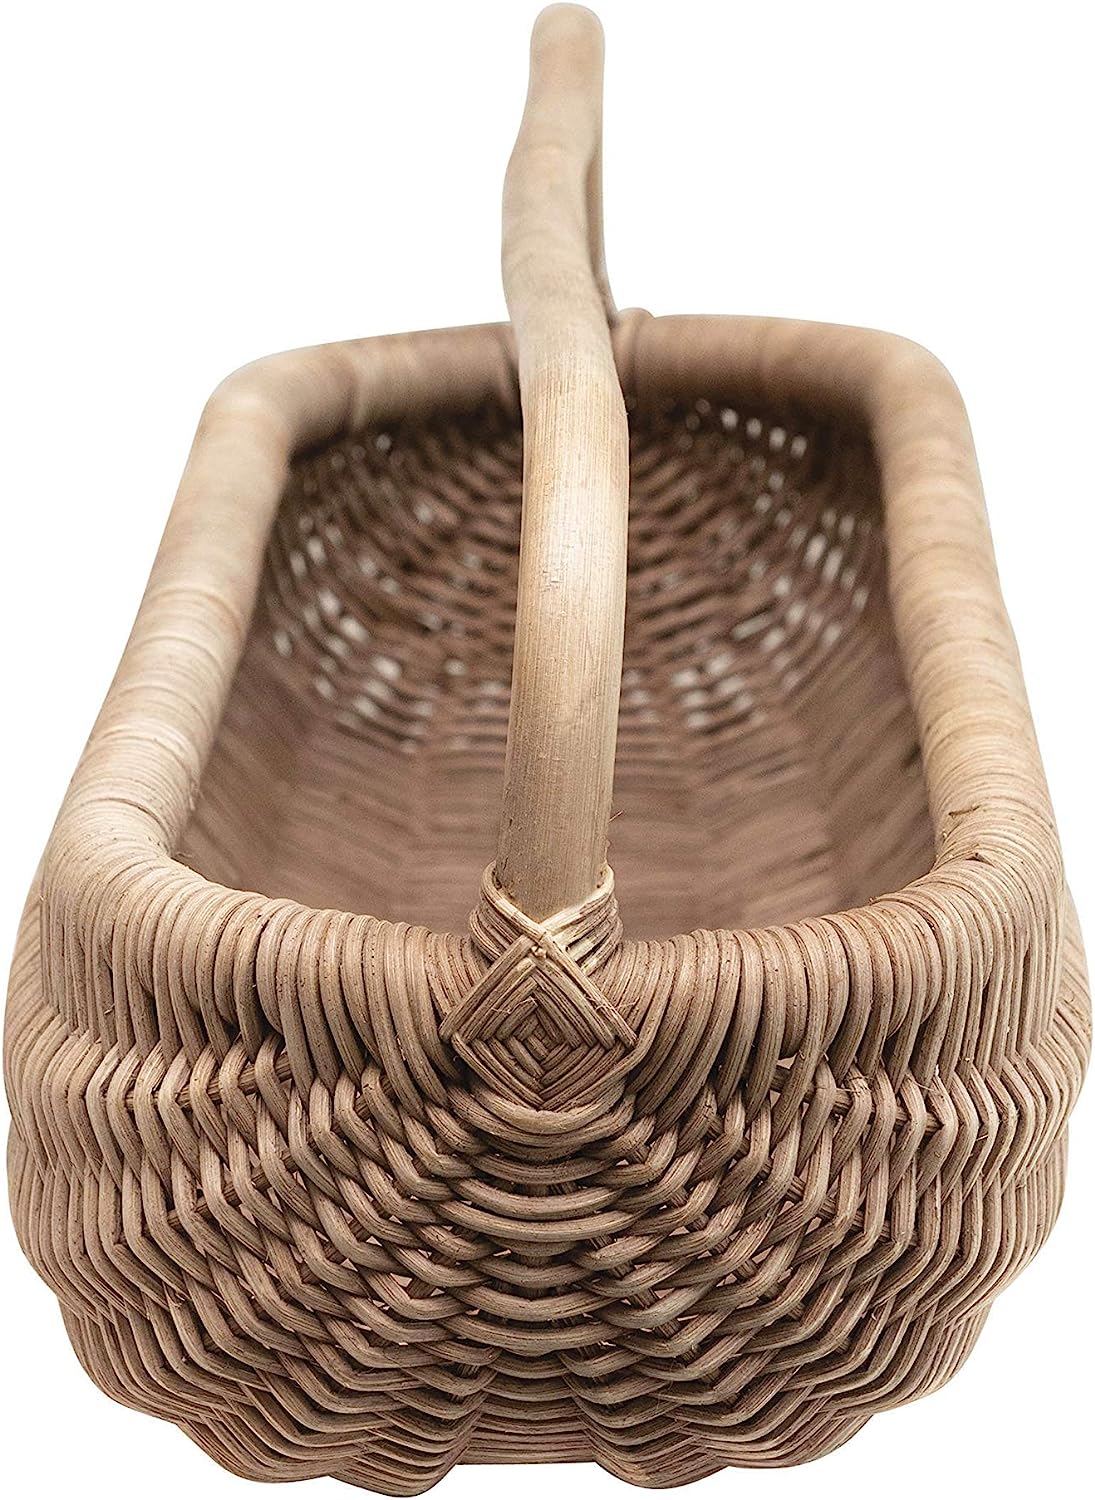 Hand Woven Rattan Basket with Handle